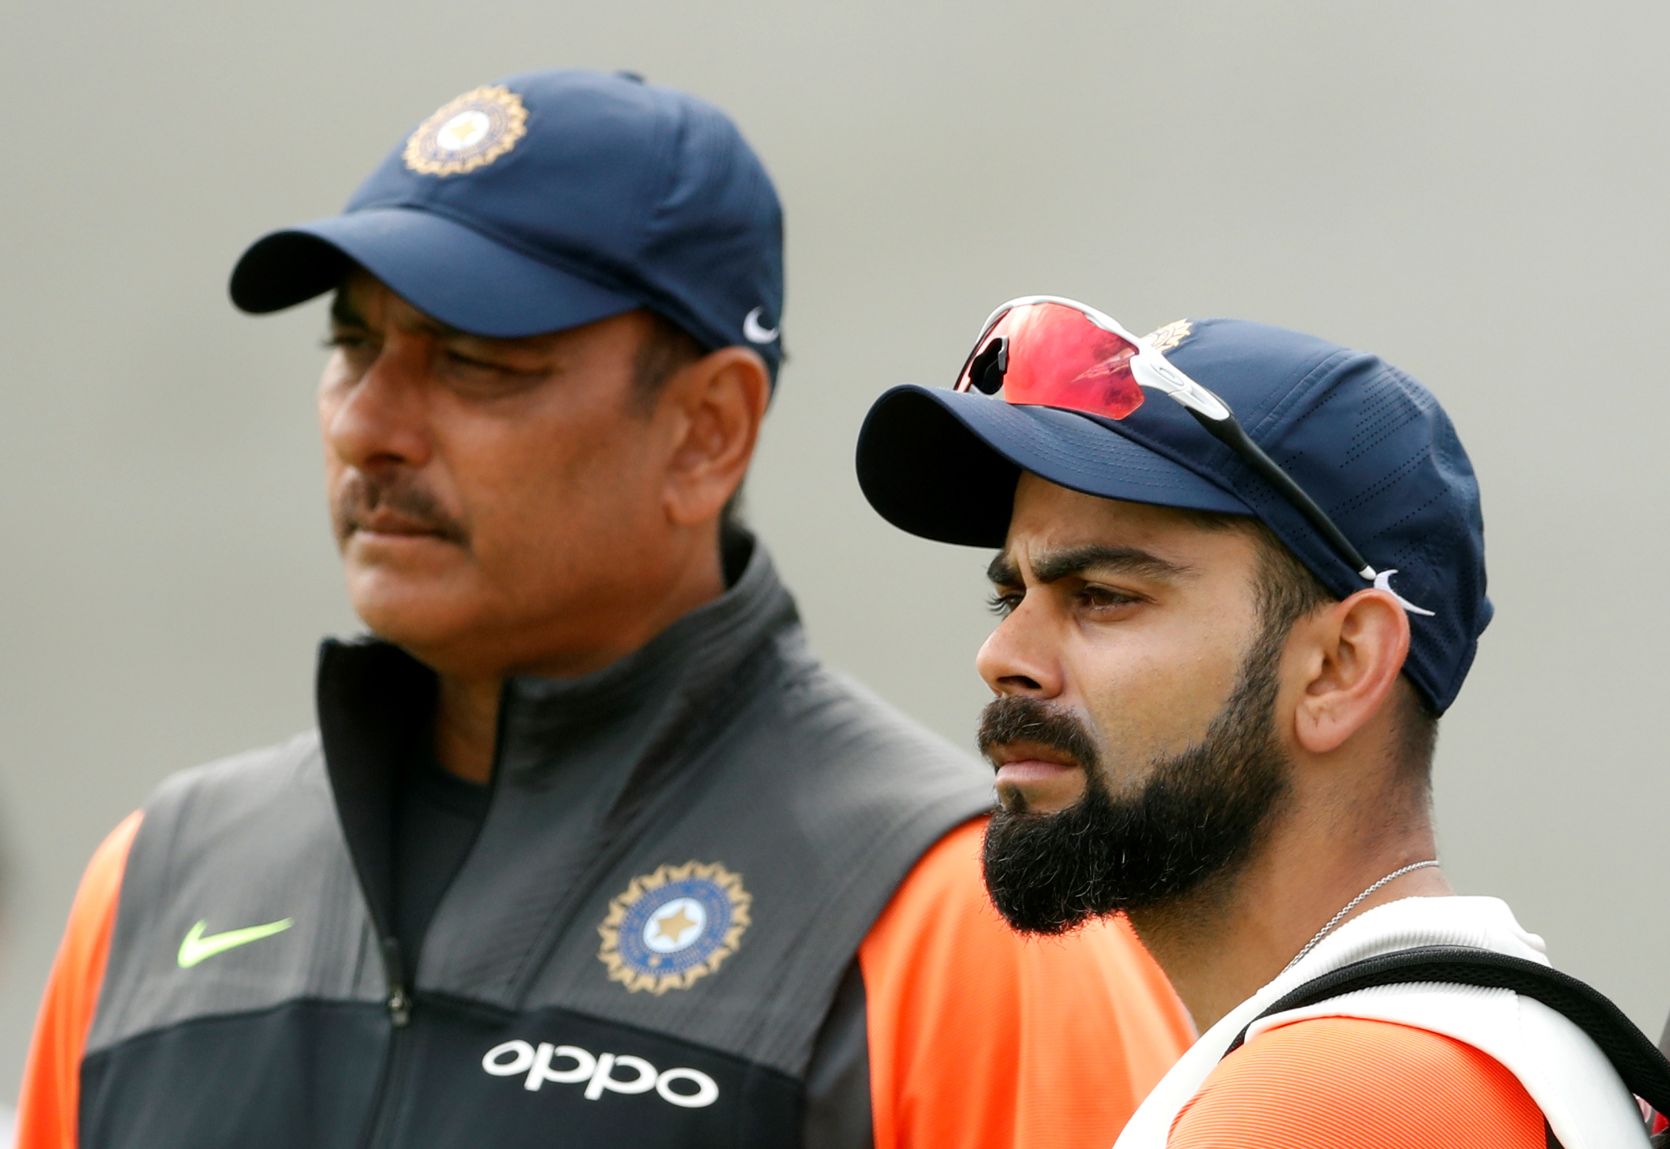 Ravi Shastri doesn't rule out Virat Kohli giving up ODI captaincy to 'focus' on batting